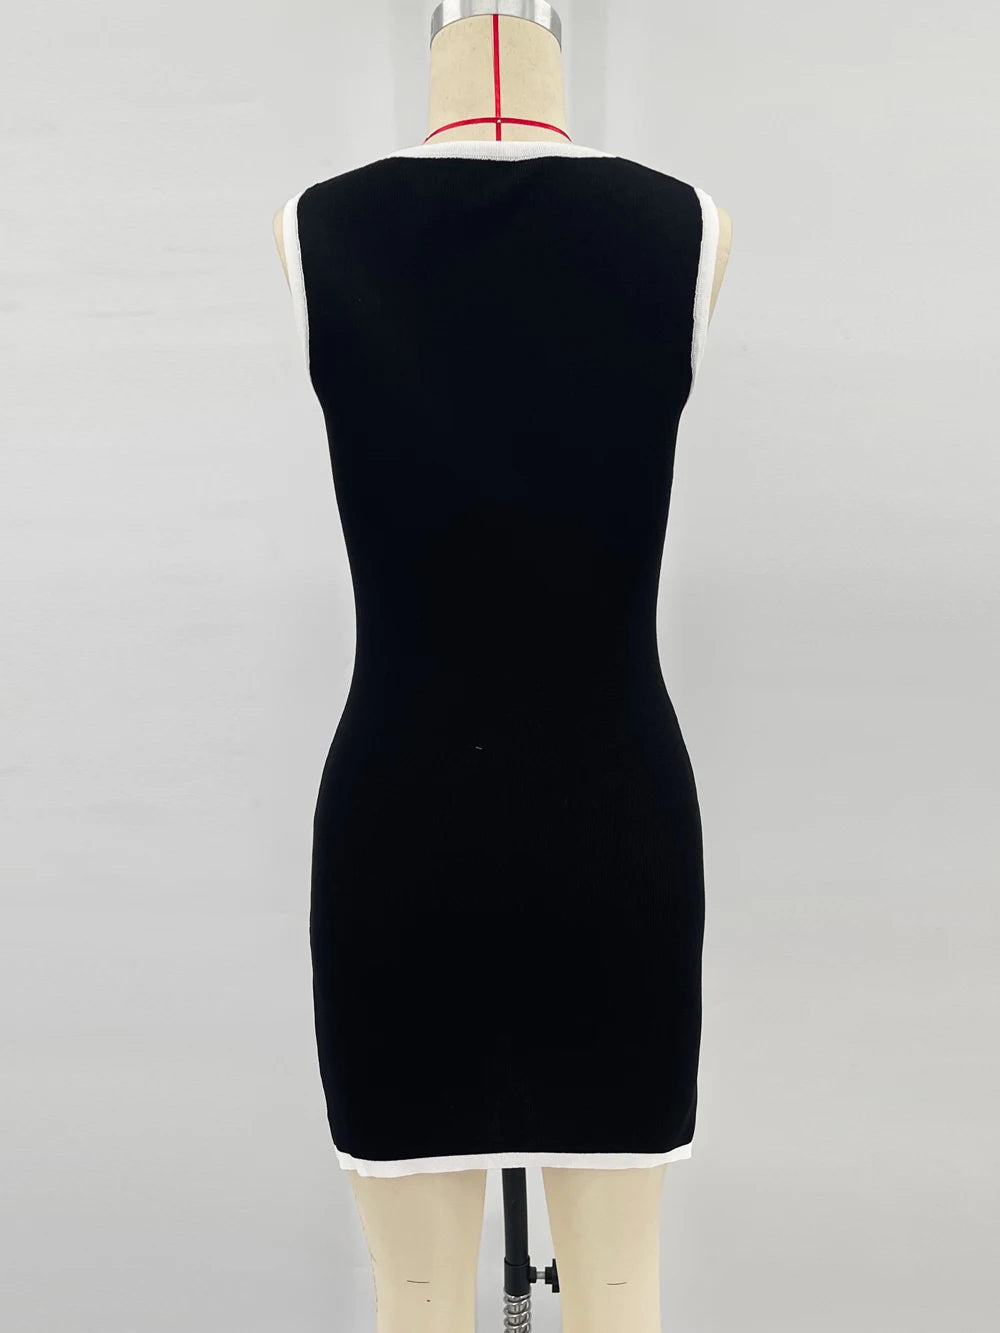 Knit Trimmed Black Old Money Style Mini Dress